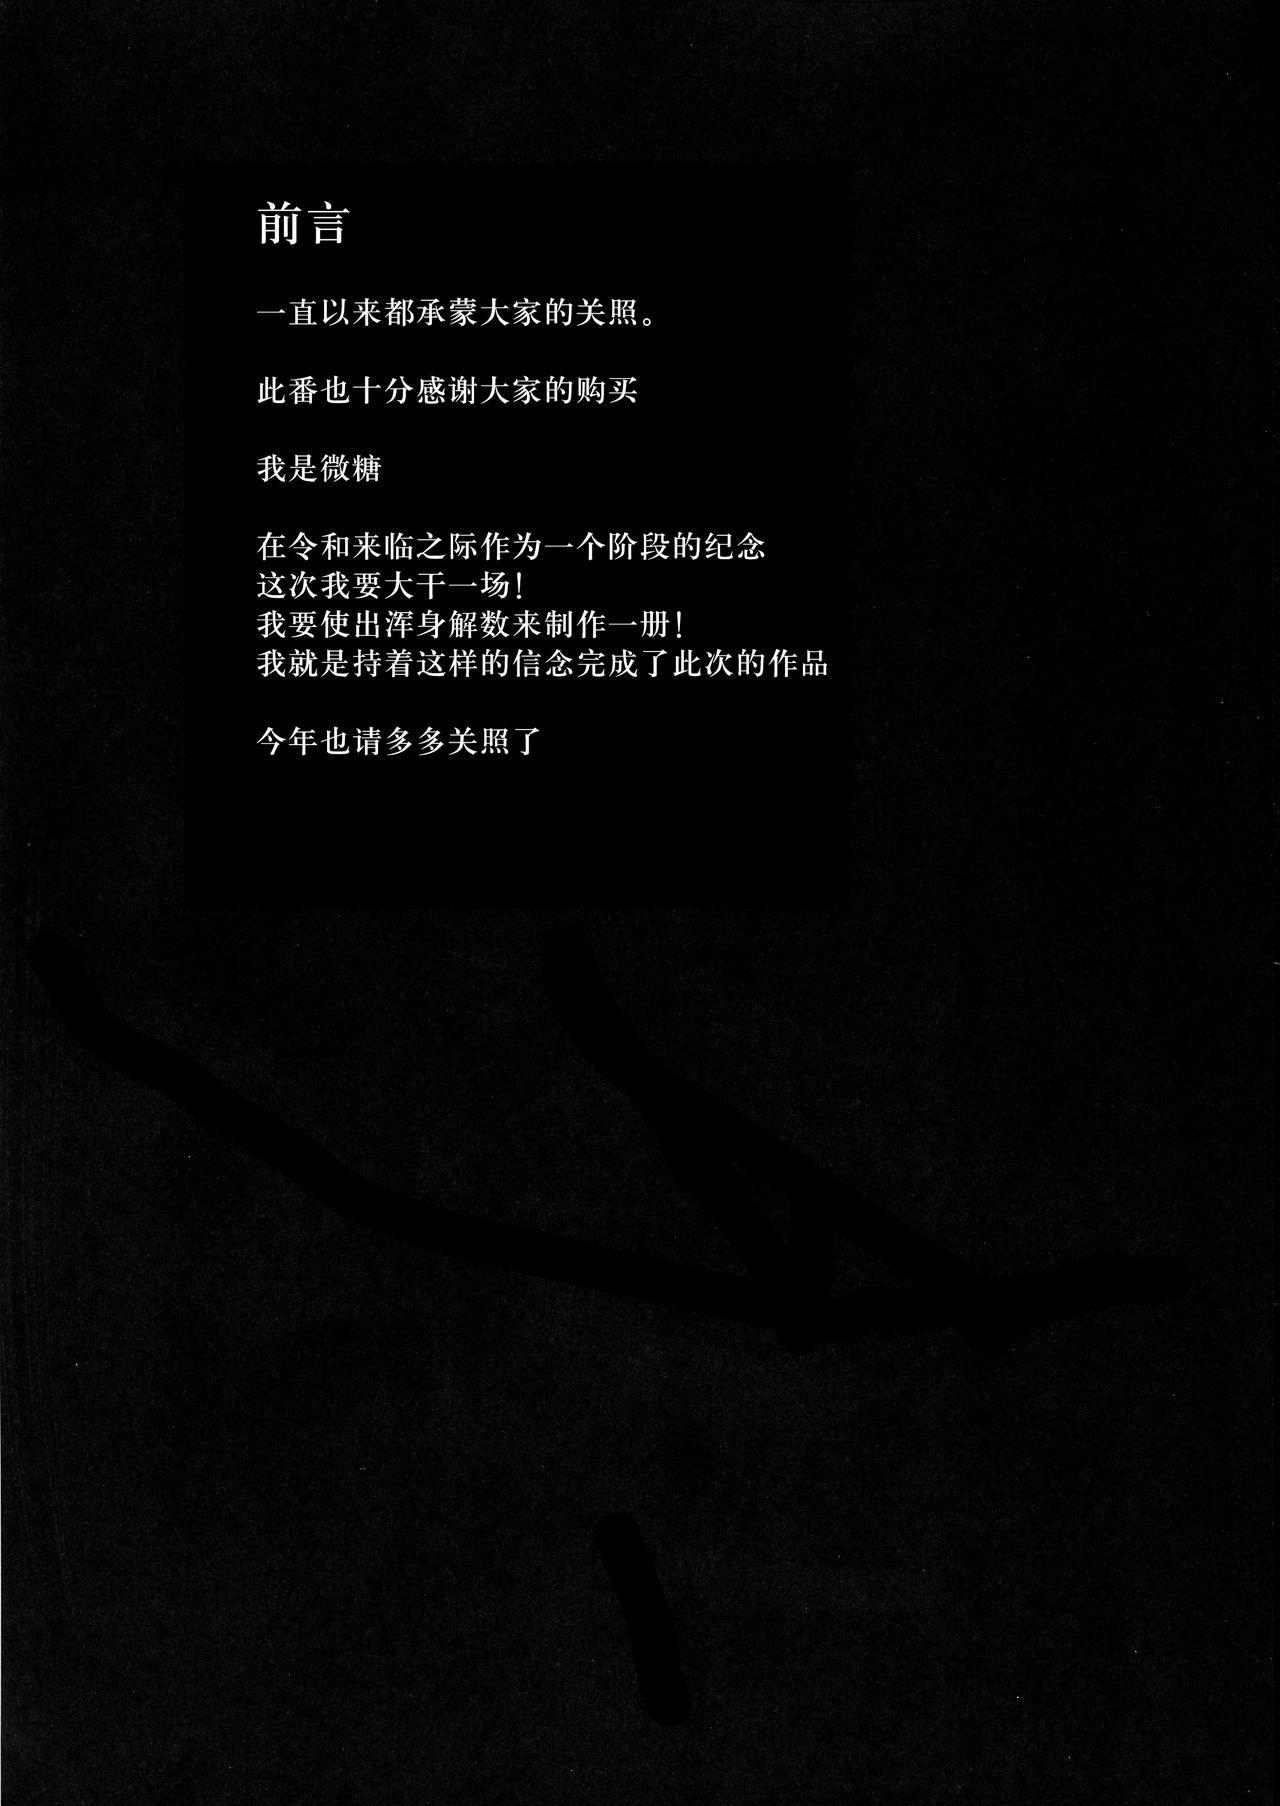 Comic One 300 Years (Comic One) Final Fantasy VII (Comic One) Yakiniku Teikoku (HayateMegumi) Live Sashi Hitosuji 300-nen (FinalFantasy VII) Chinese-第1章-图片160